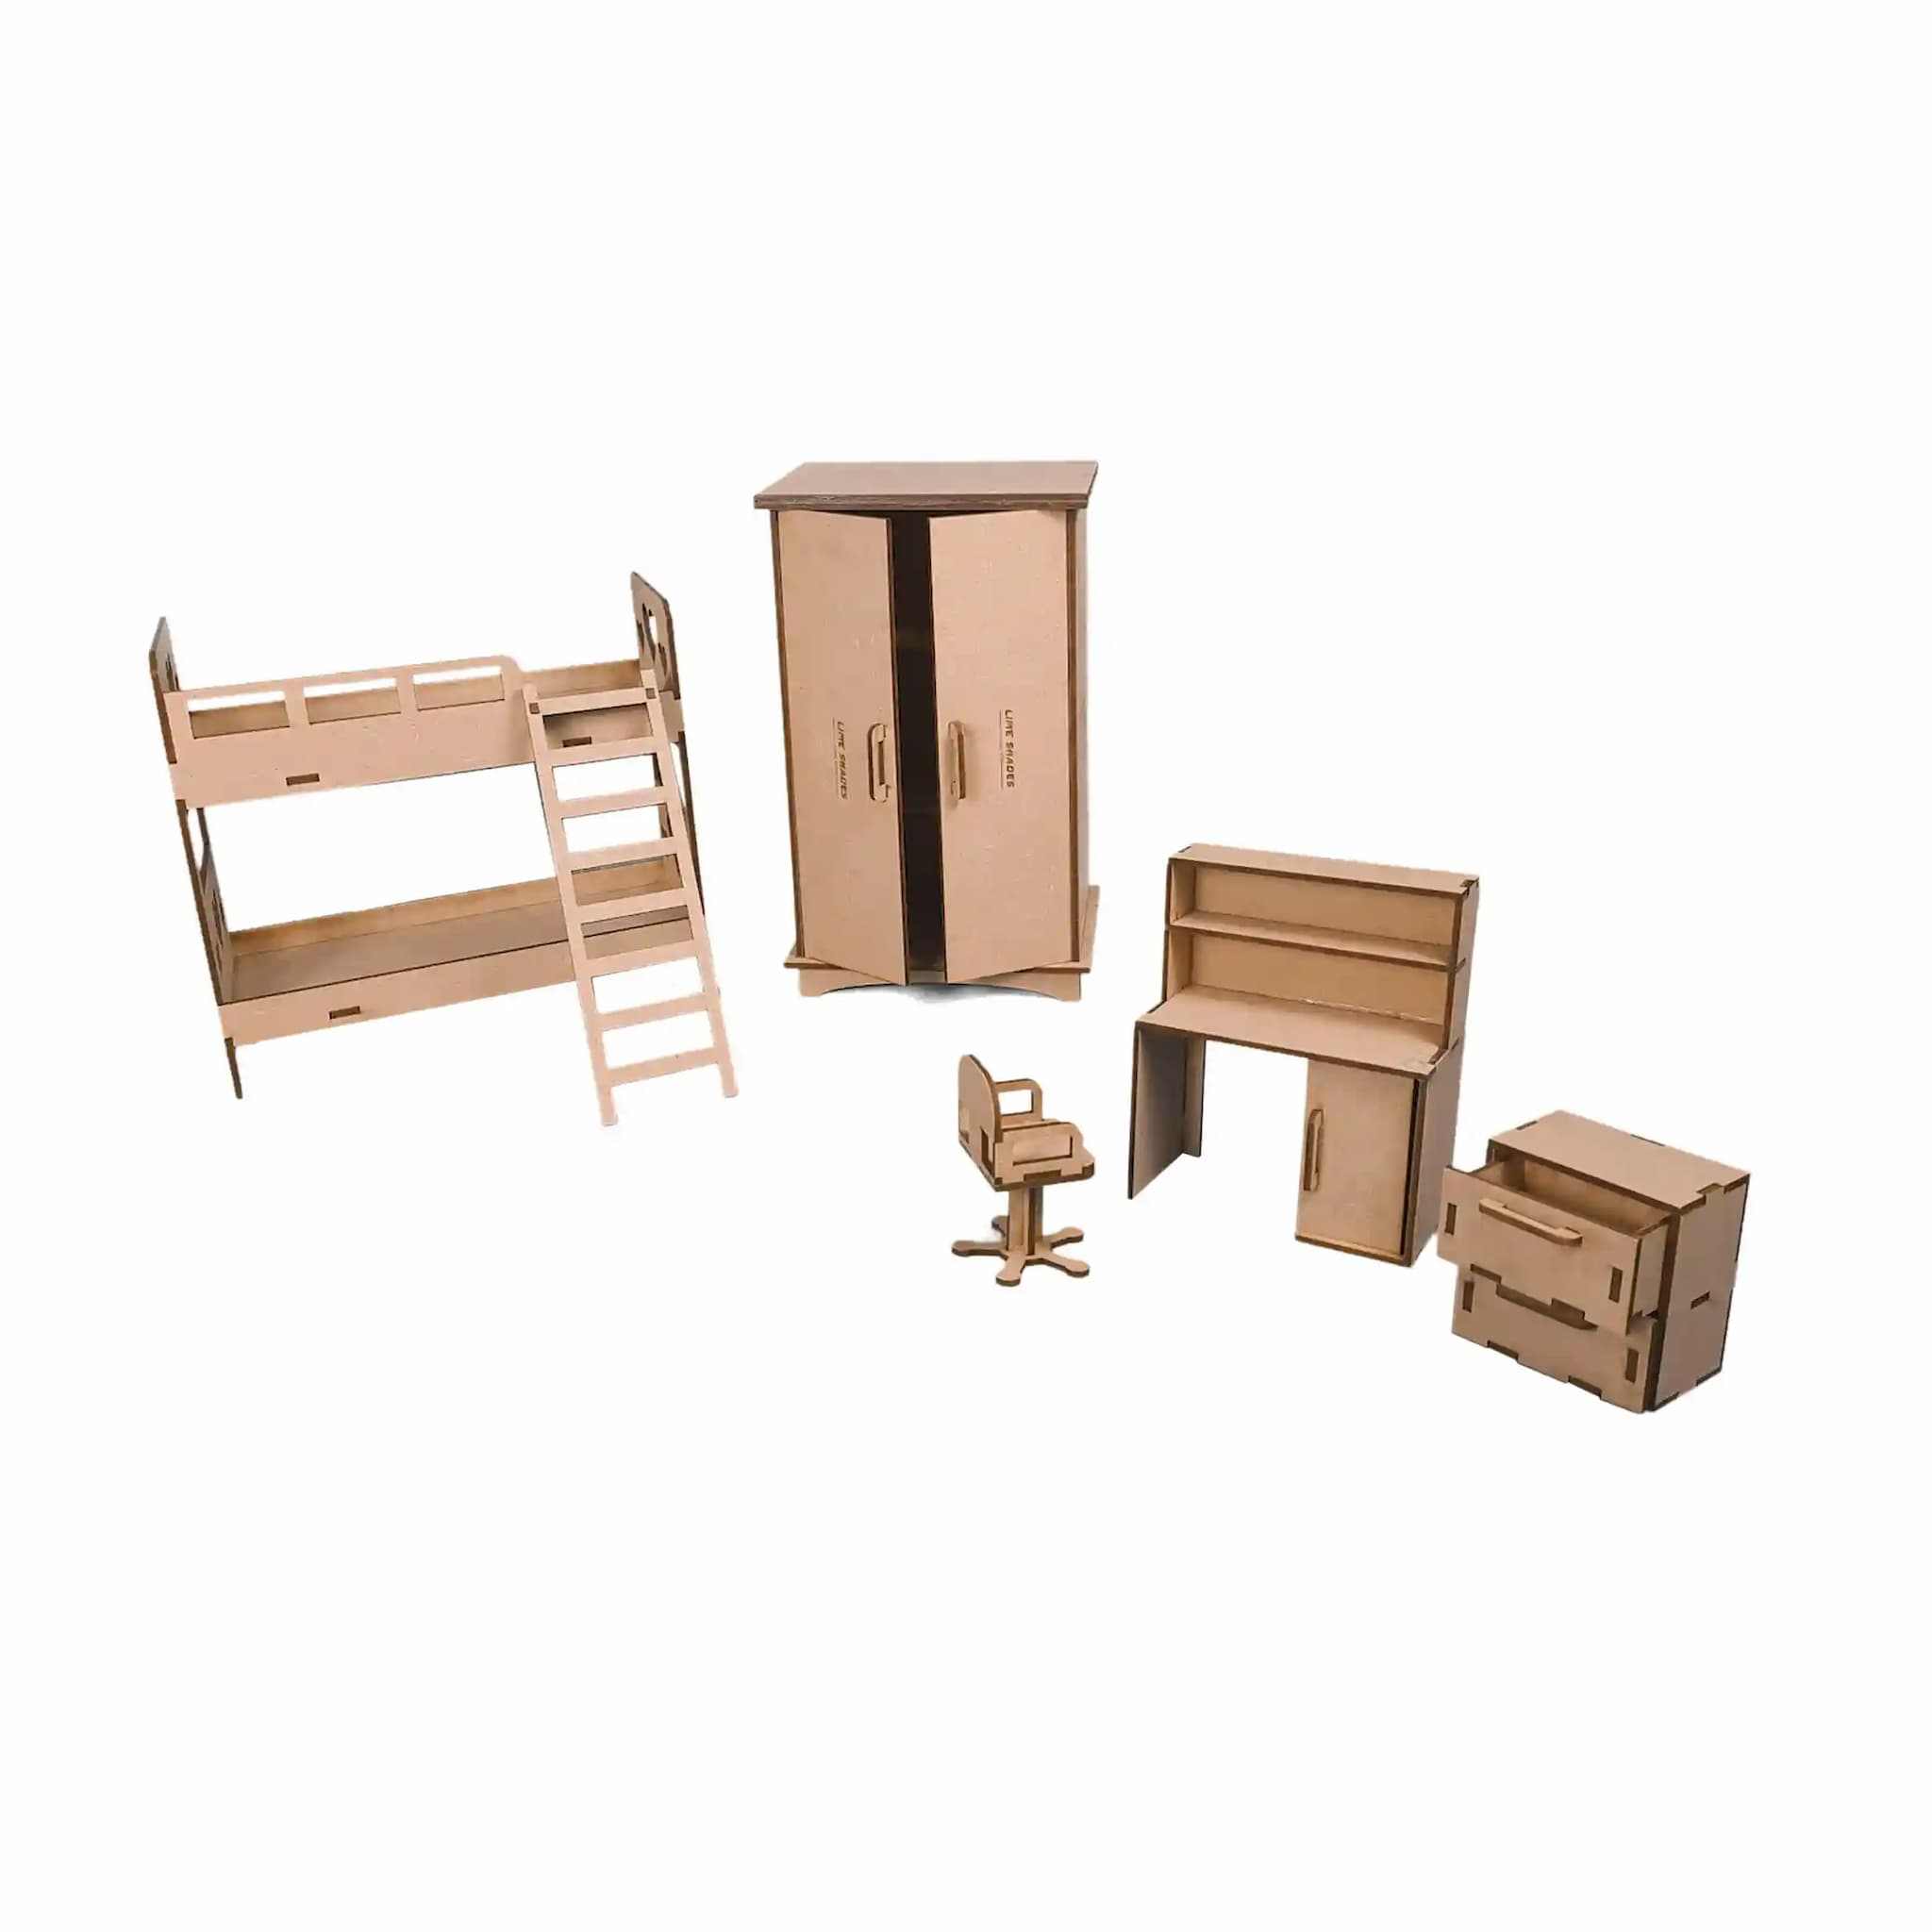 Miniature Furniture Kids/Childrens Room Set (05 miniatures) for Dollhouse